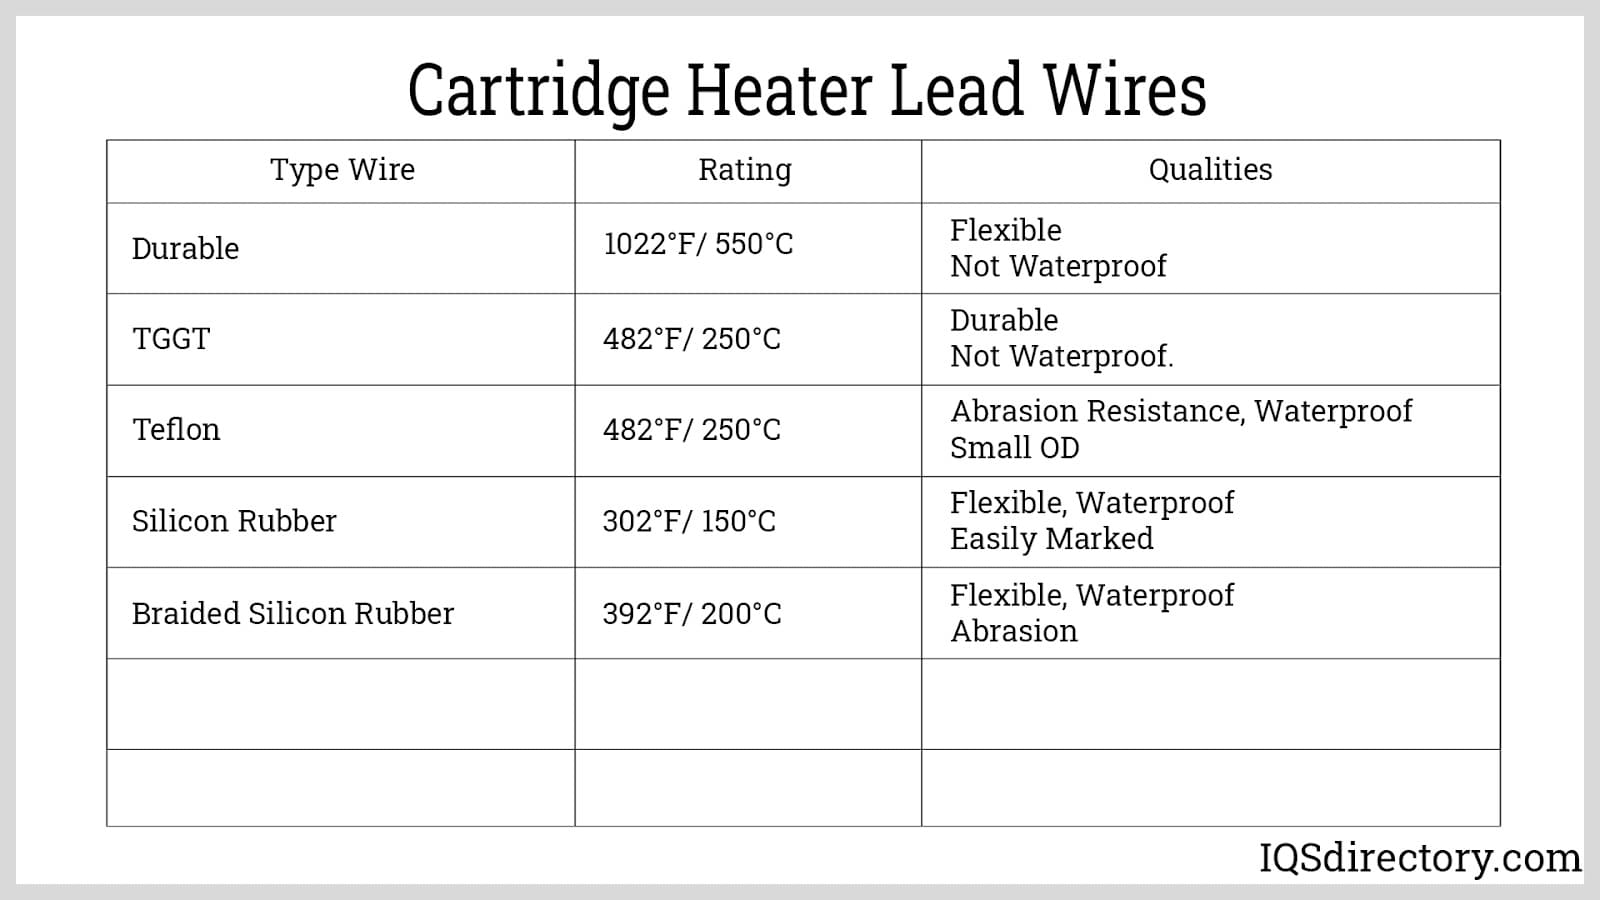 Cartridge Heater Lead Wires